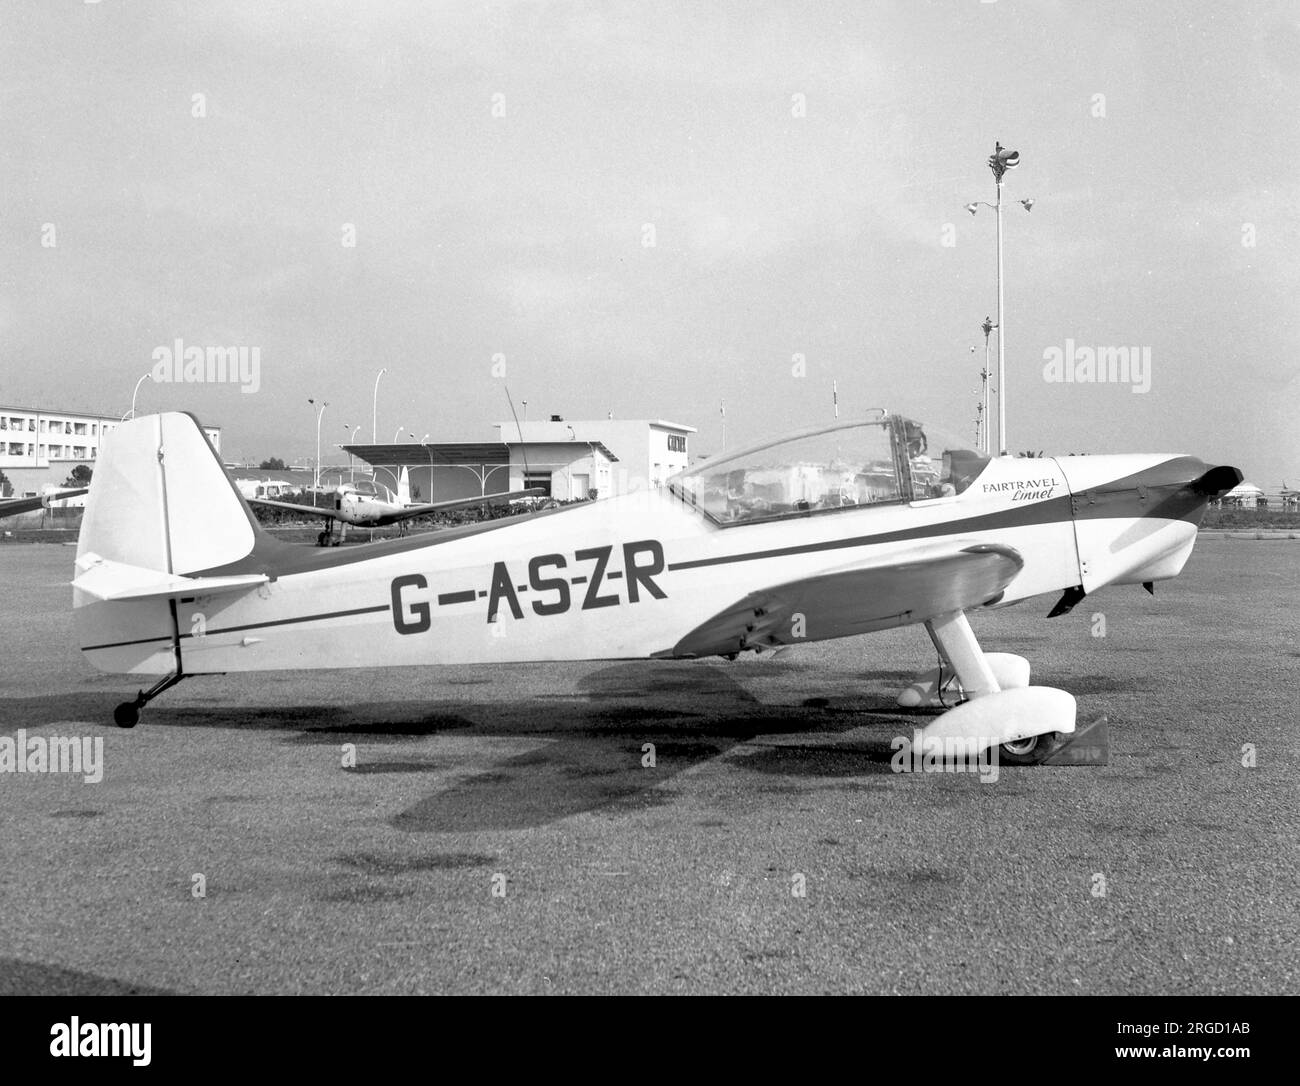 Fairtravel Linnet G-ASZR (msn 005), a Nizza il 5 febbraio 1966. Foto Stock